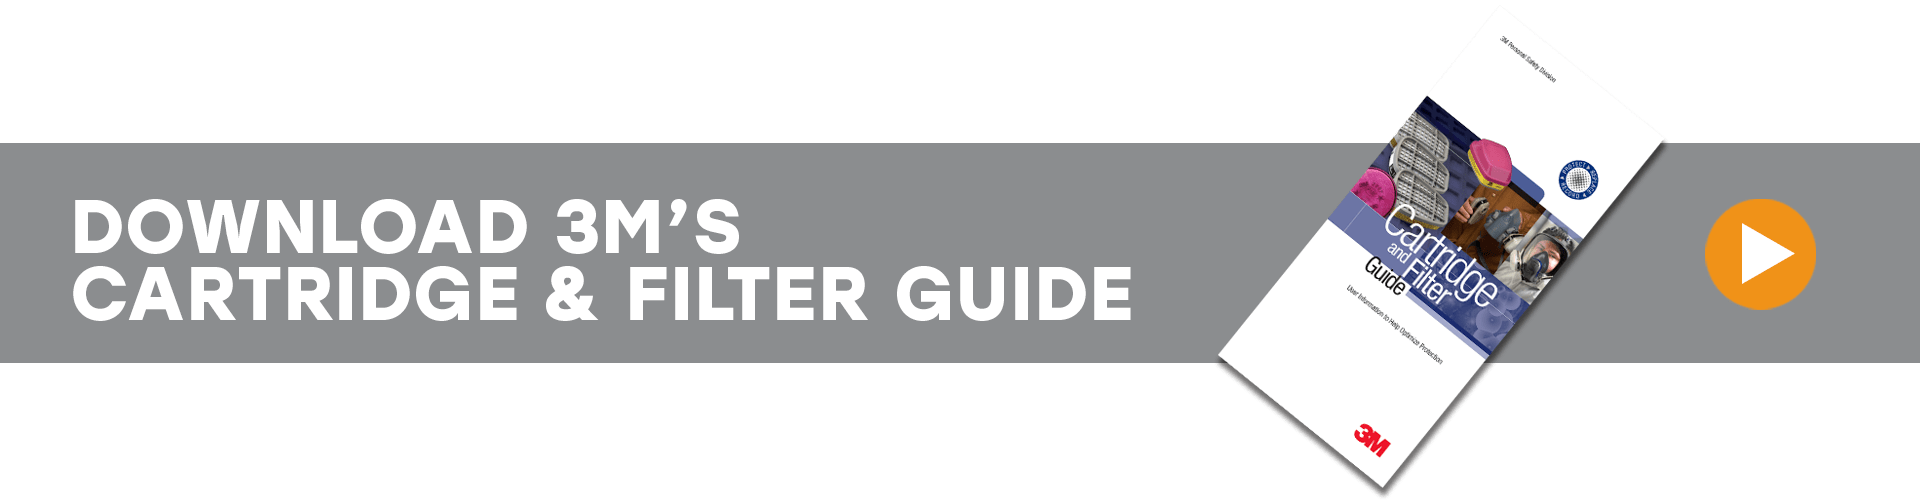 filter guide download